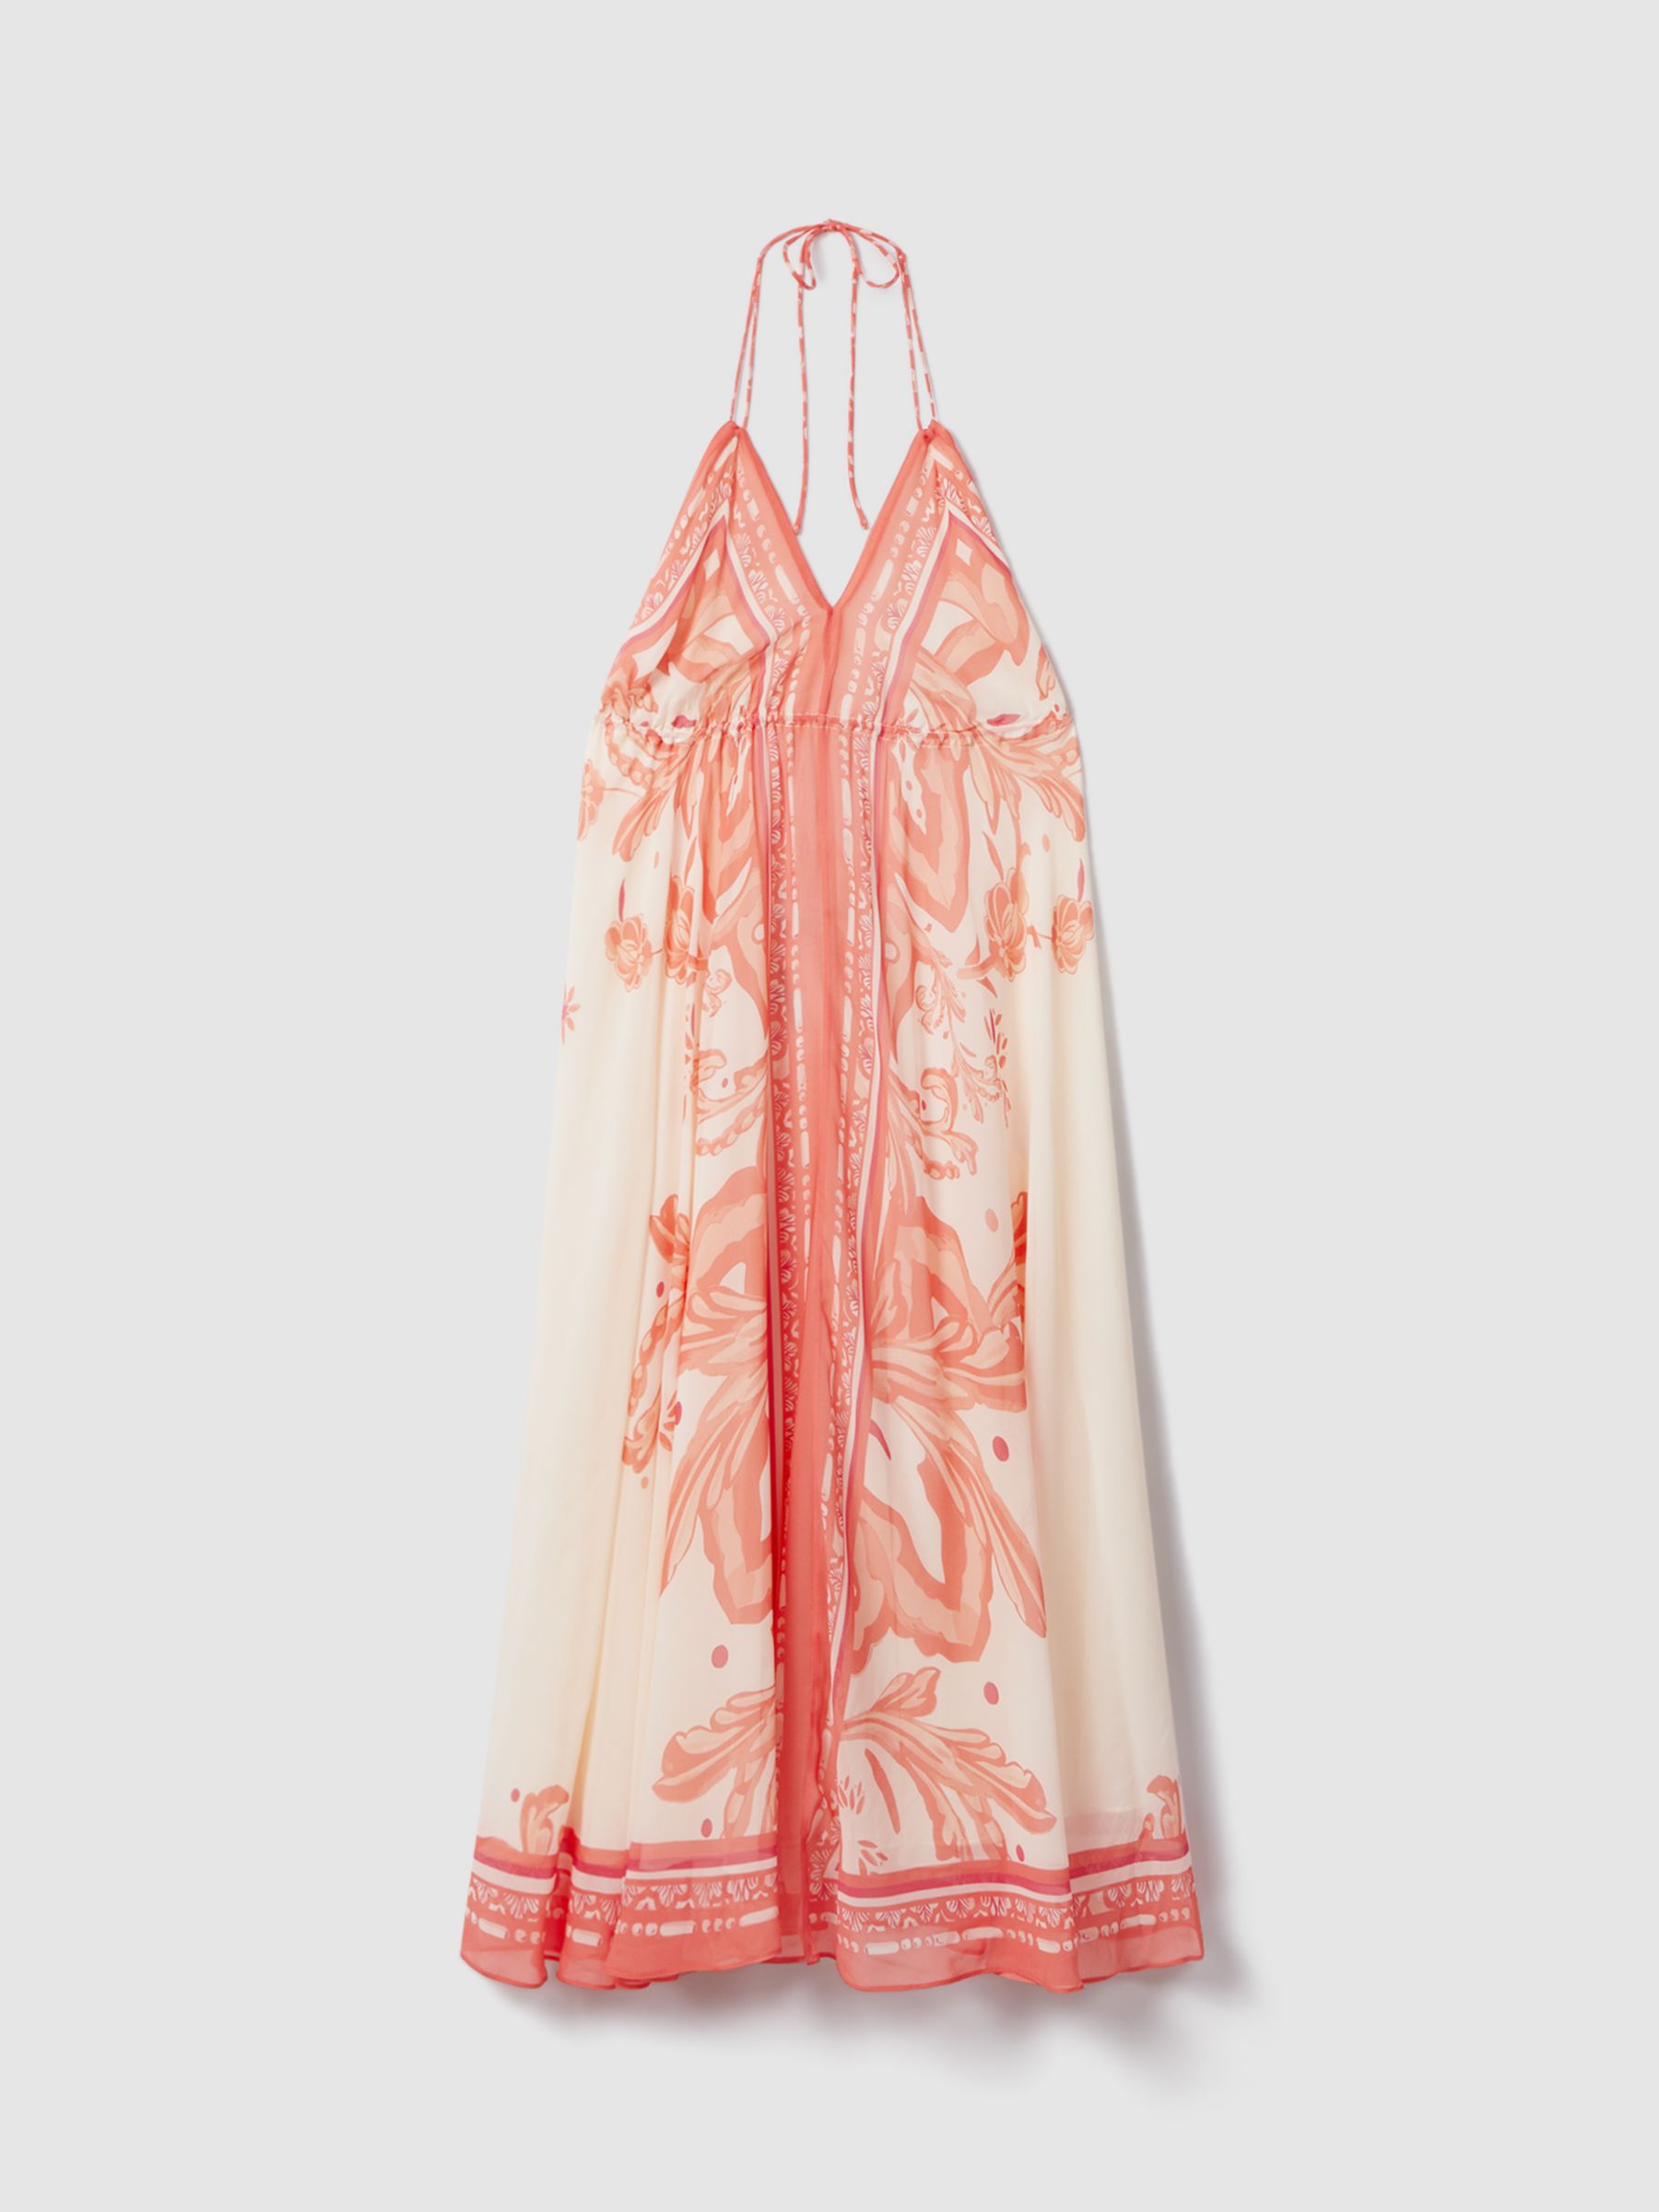 Reiss Delilah Placement Print Halterneck Maxi Dress, Coral/Cream, 6